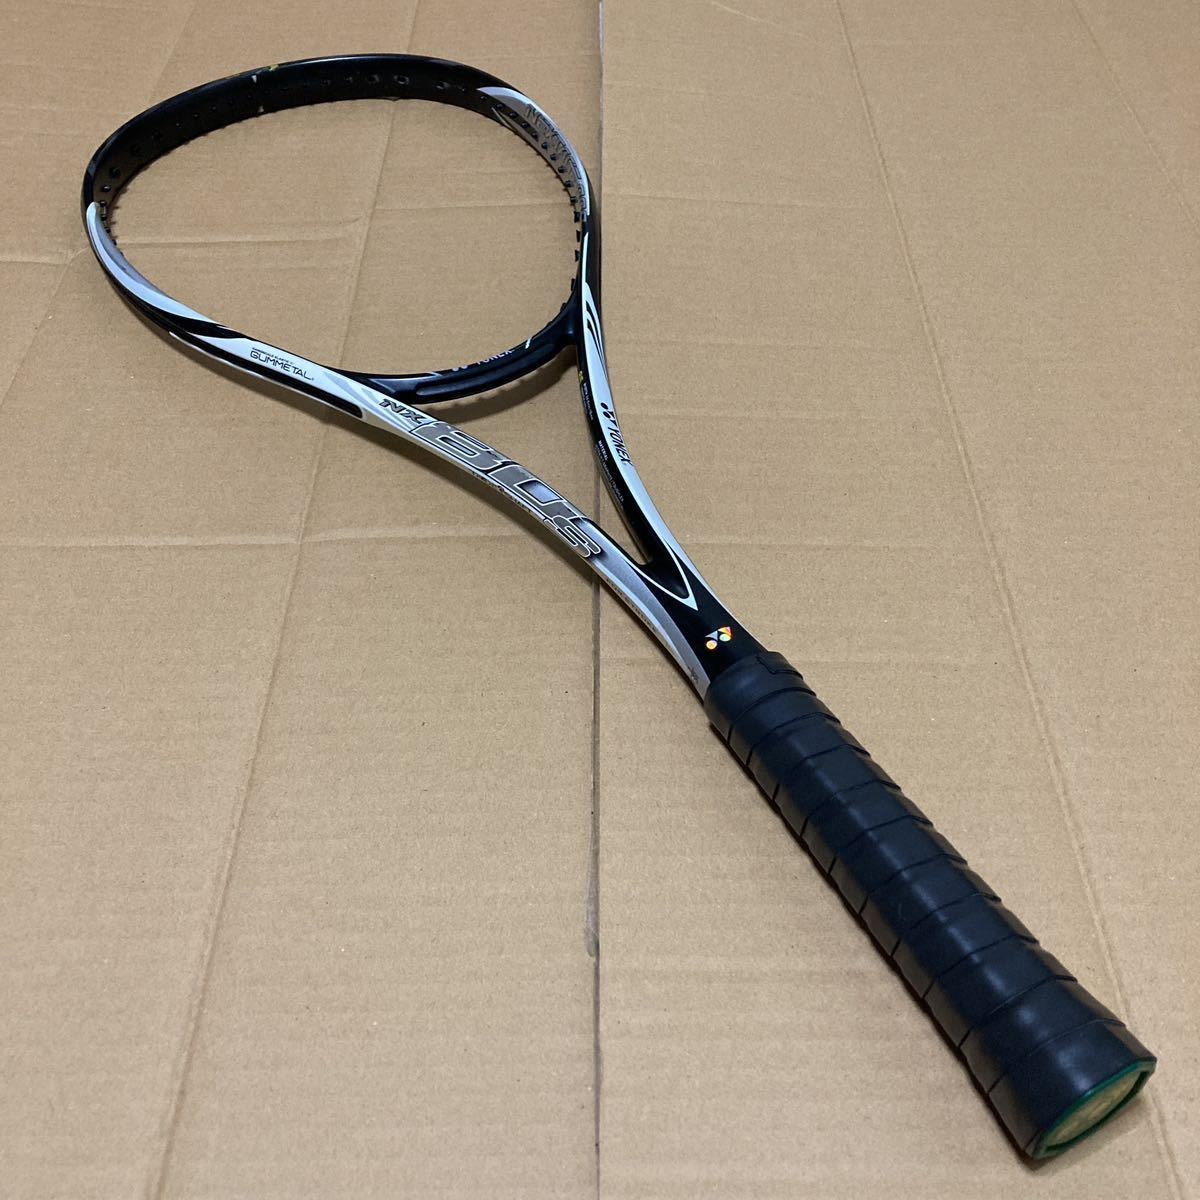 YONEX i-NEXTAGE アイネクステージ80s軟式テニスラケット-